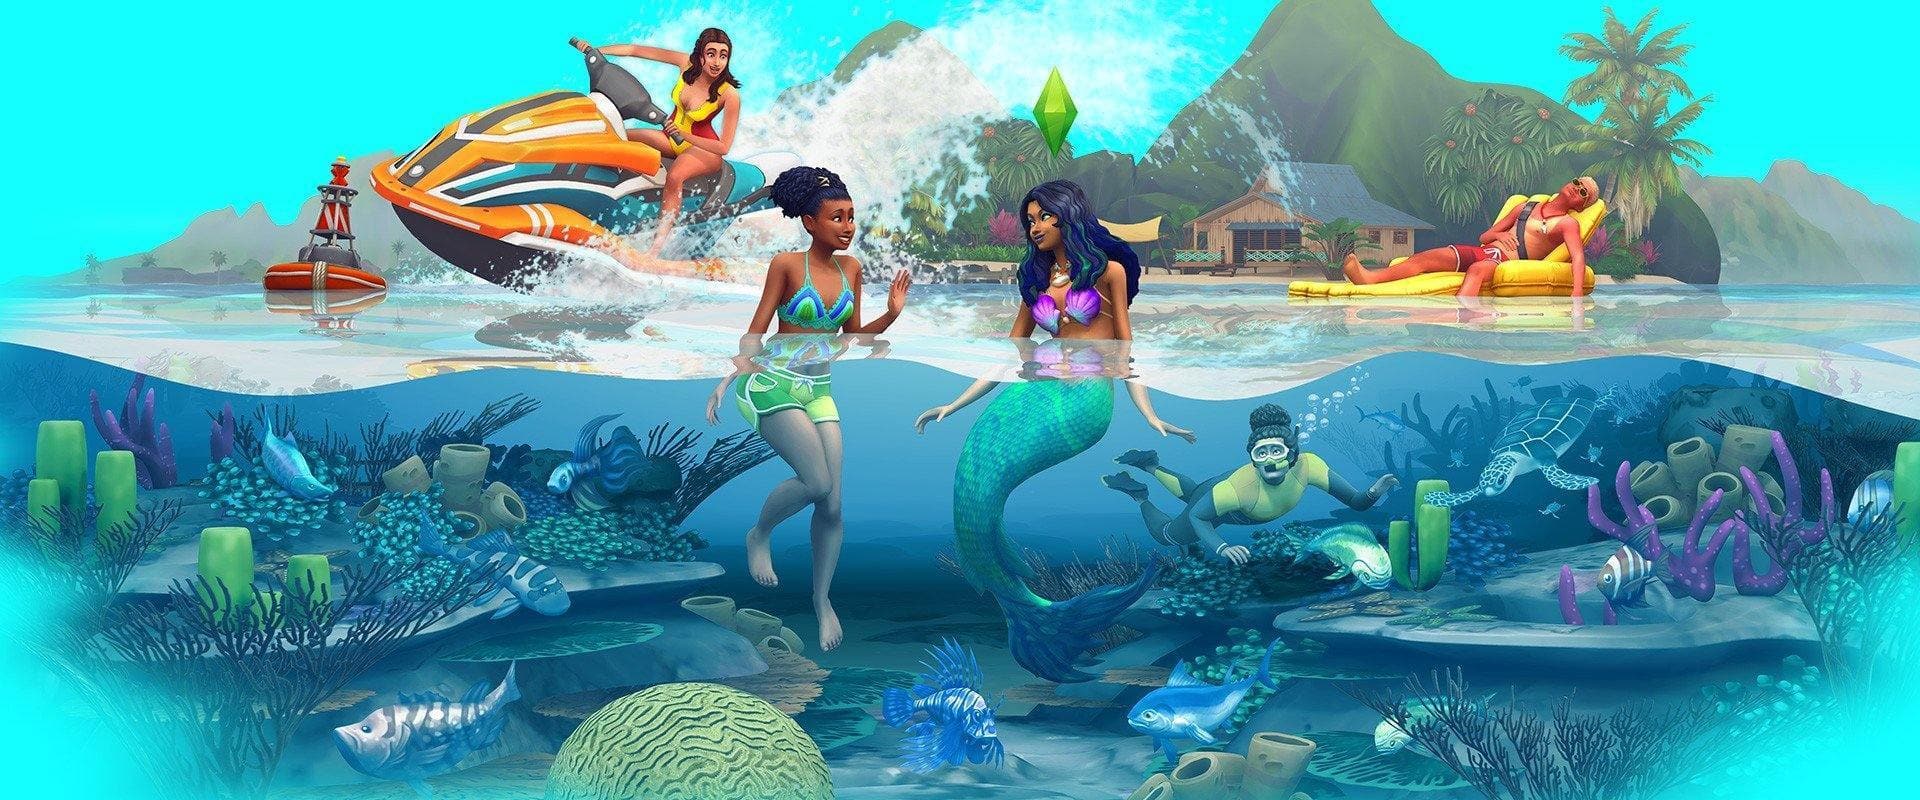 The Sims 4: Island Living - למחשב - EXON - גיימינג ותוכנות - משחקים ותוכנות למחשב ולאקס בוקס!